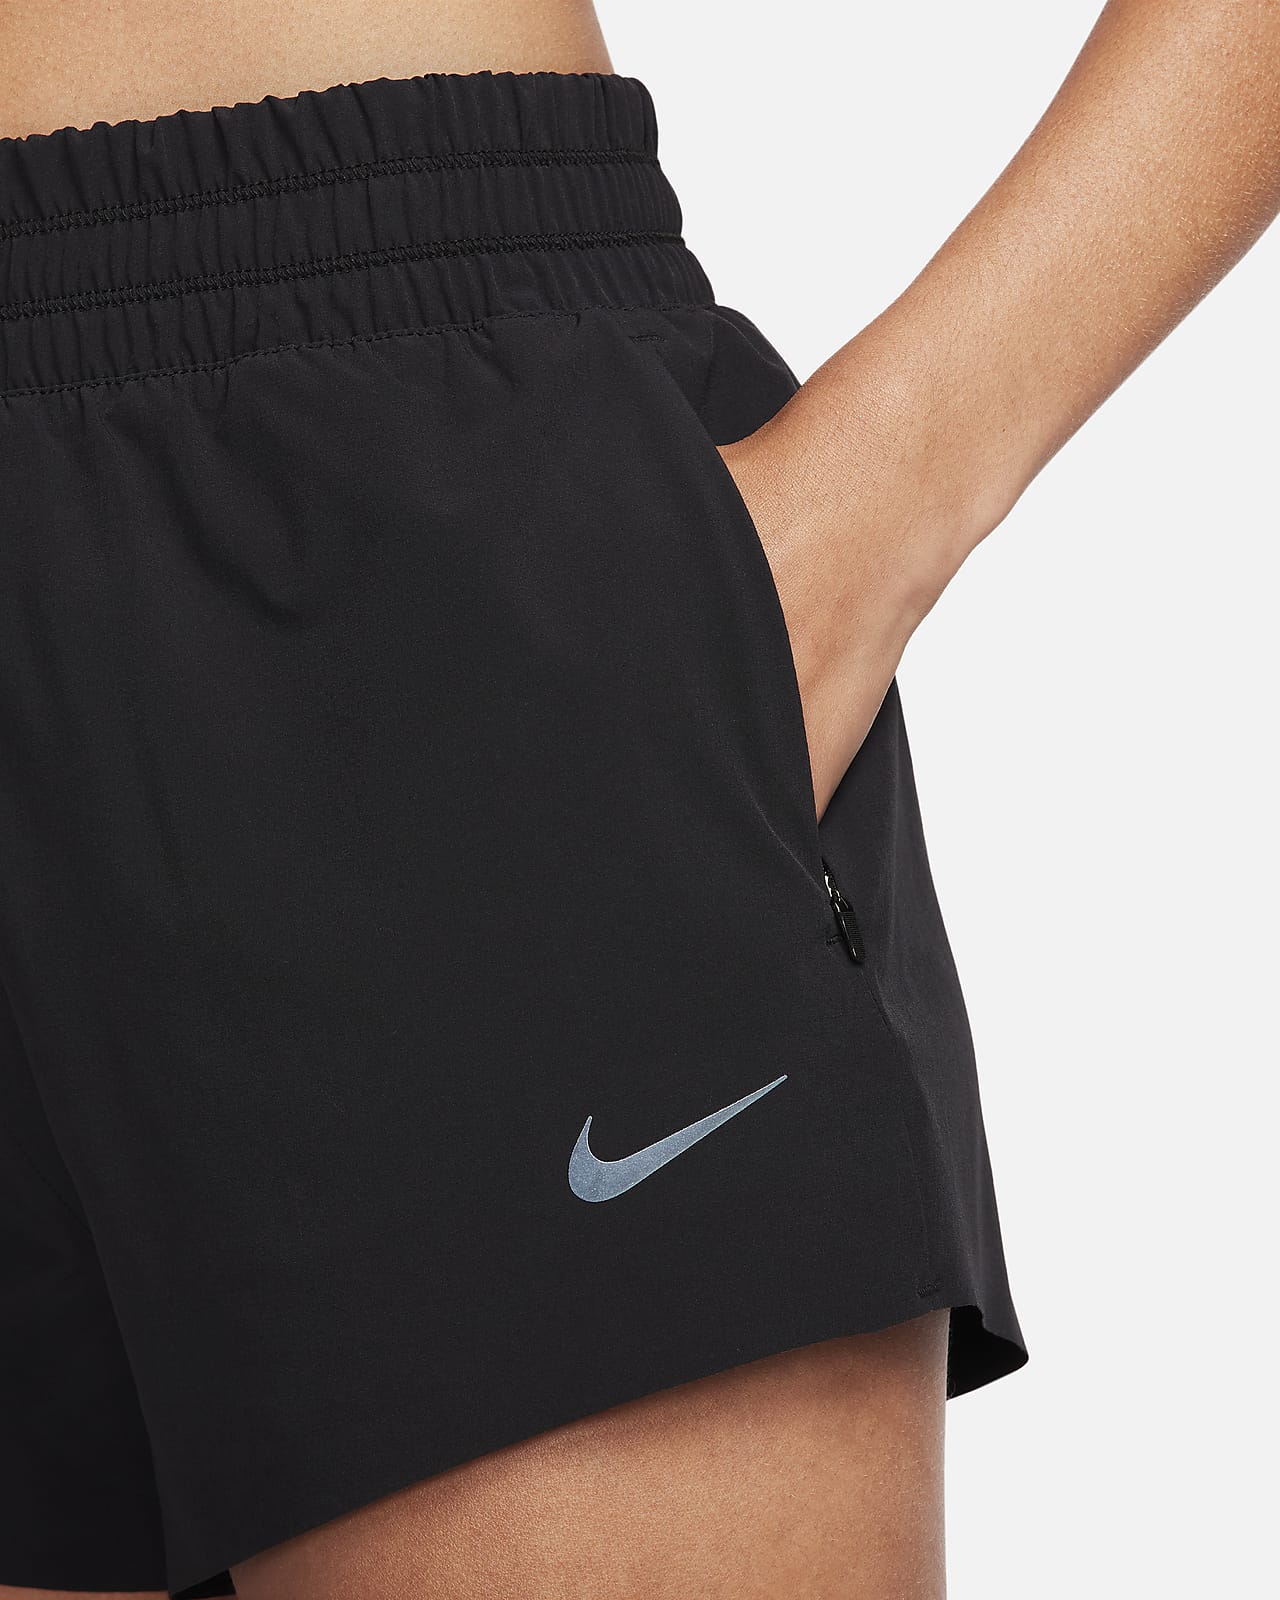 Nike, Shorts, Black Nike Dry Fit Running Shorts Size Xs